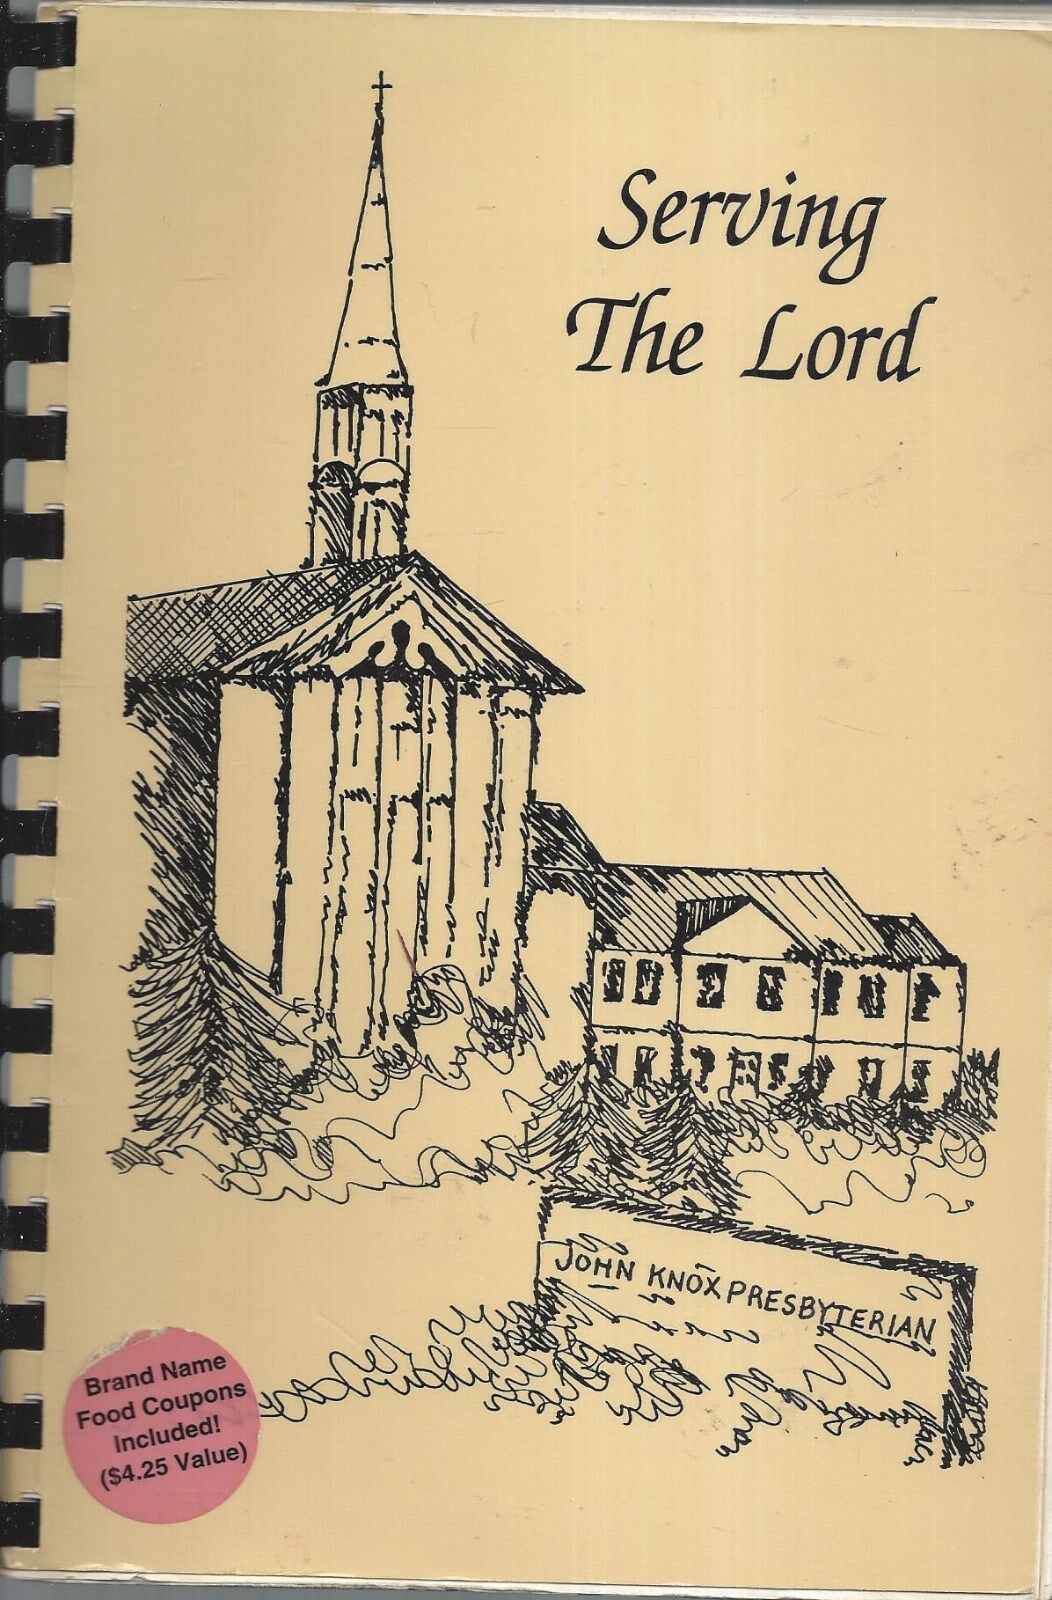 * GREENVILLE SC 1992 JOHN KNOX PRESBYTERIAN CHURCH COOK BOOK * SERVING THE LORD